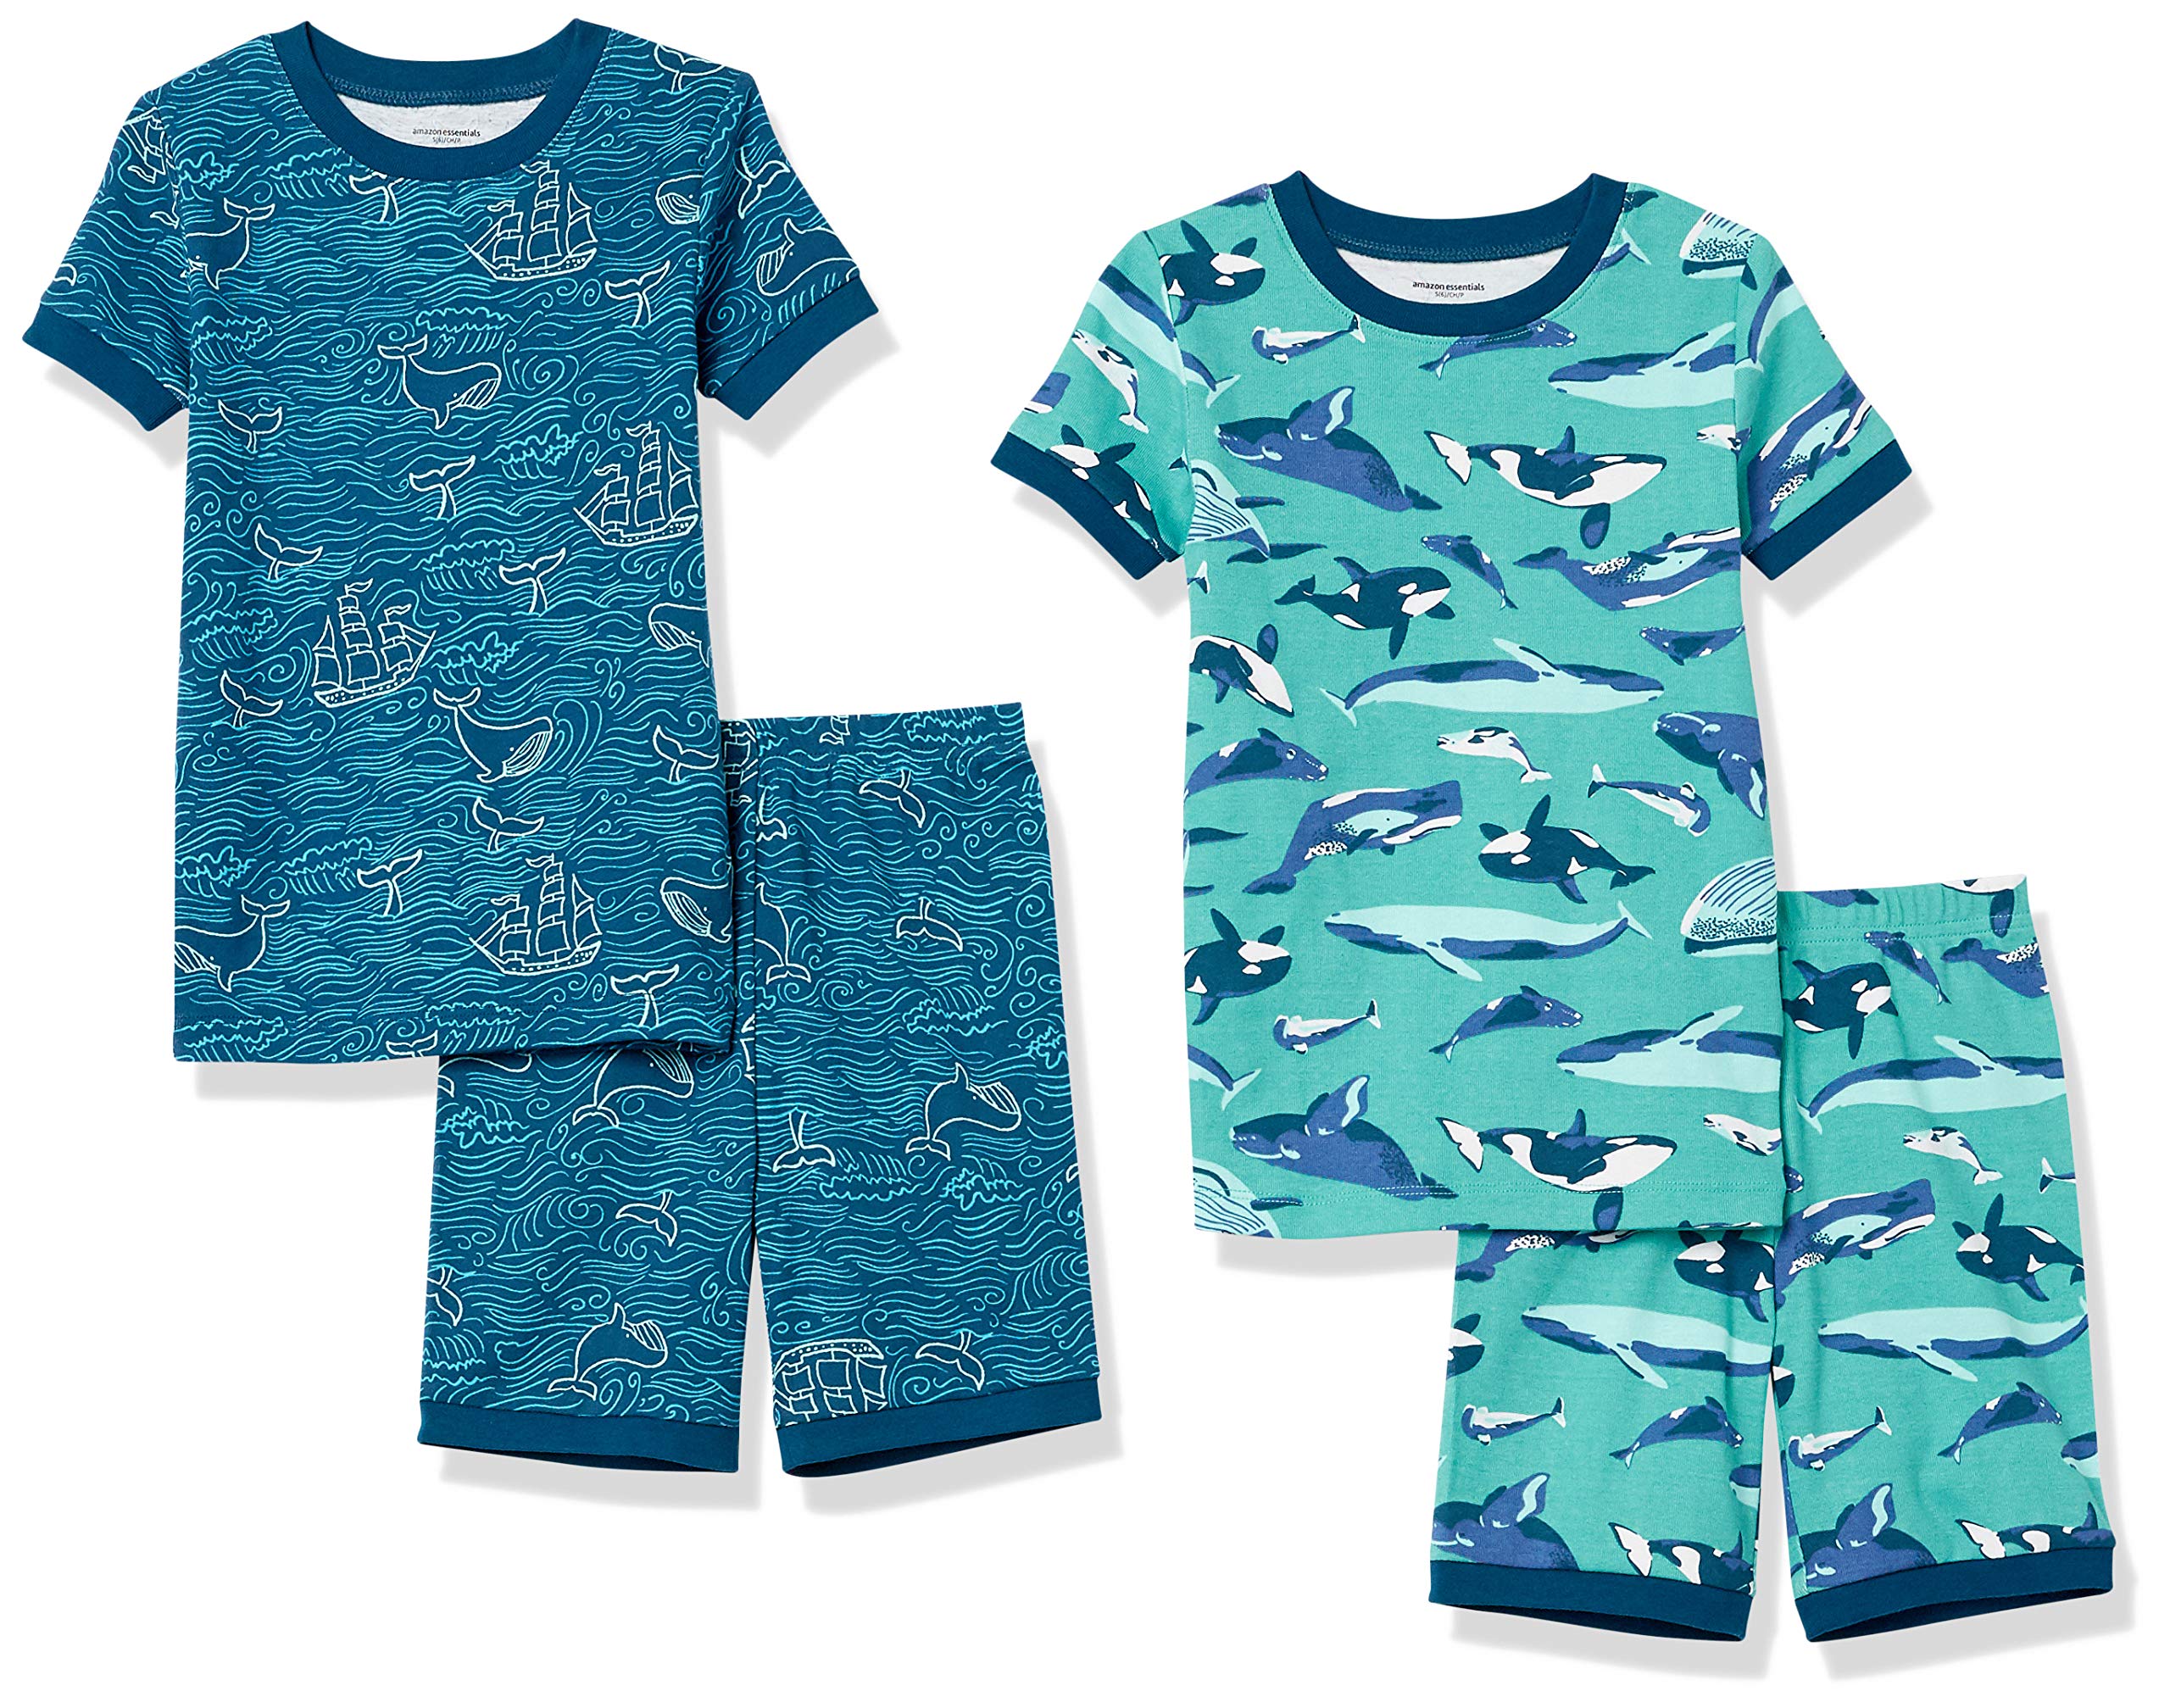 Amazon Essentials Unisex Kids and Toddlers' Snug-Fit Cotton Pajama Sleepwear Sets